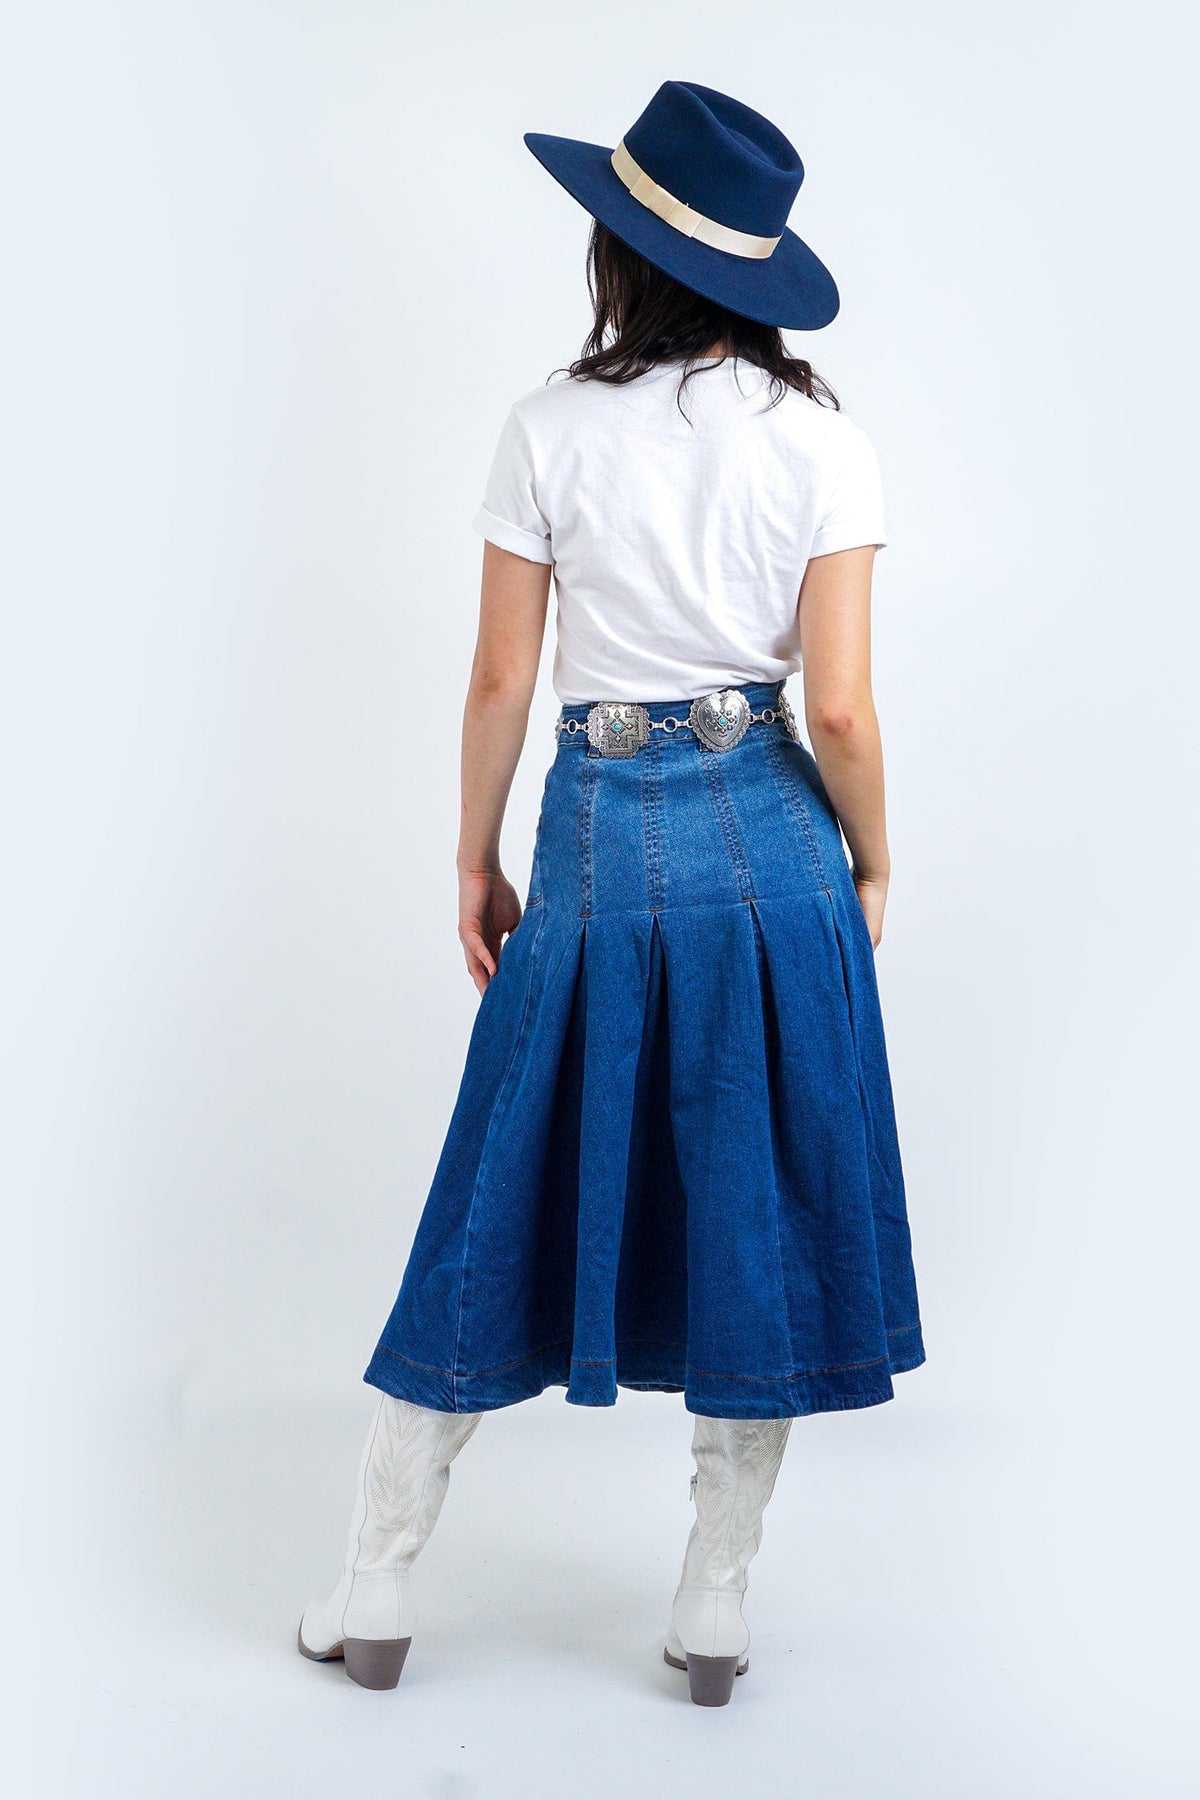 Chloe Dao Boutique SKIRTS Denim Skirt Flare Pleat Bottom